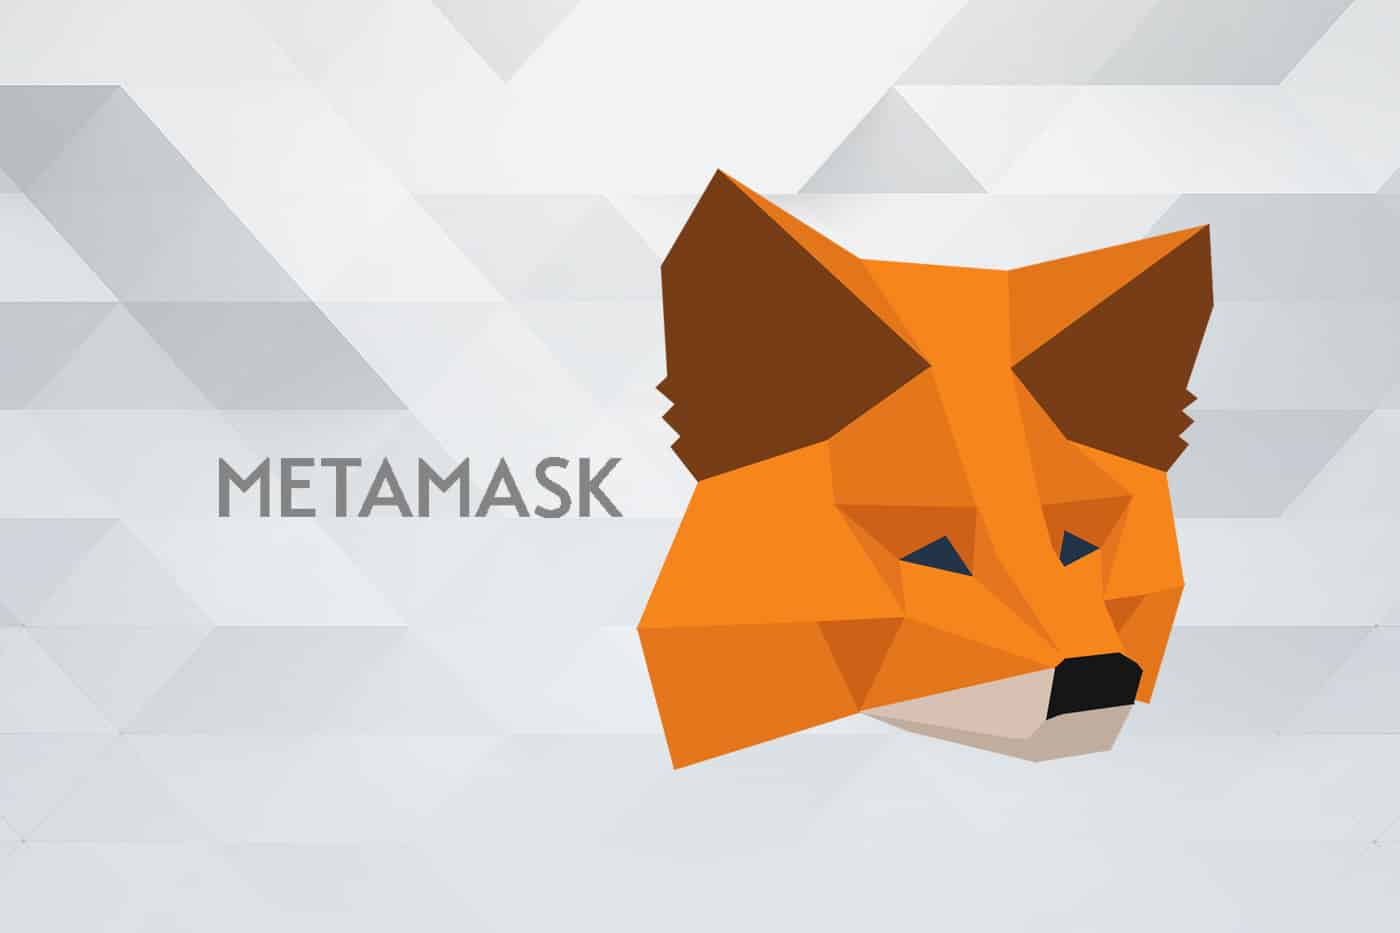 metamask compromised